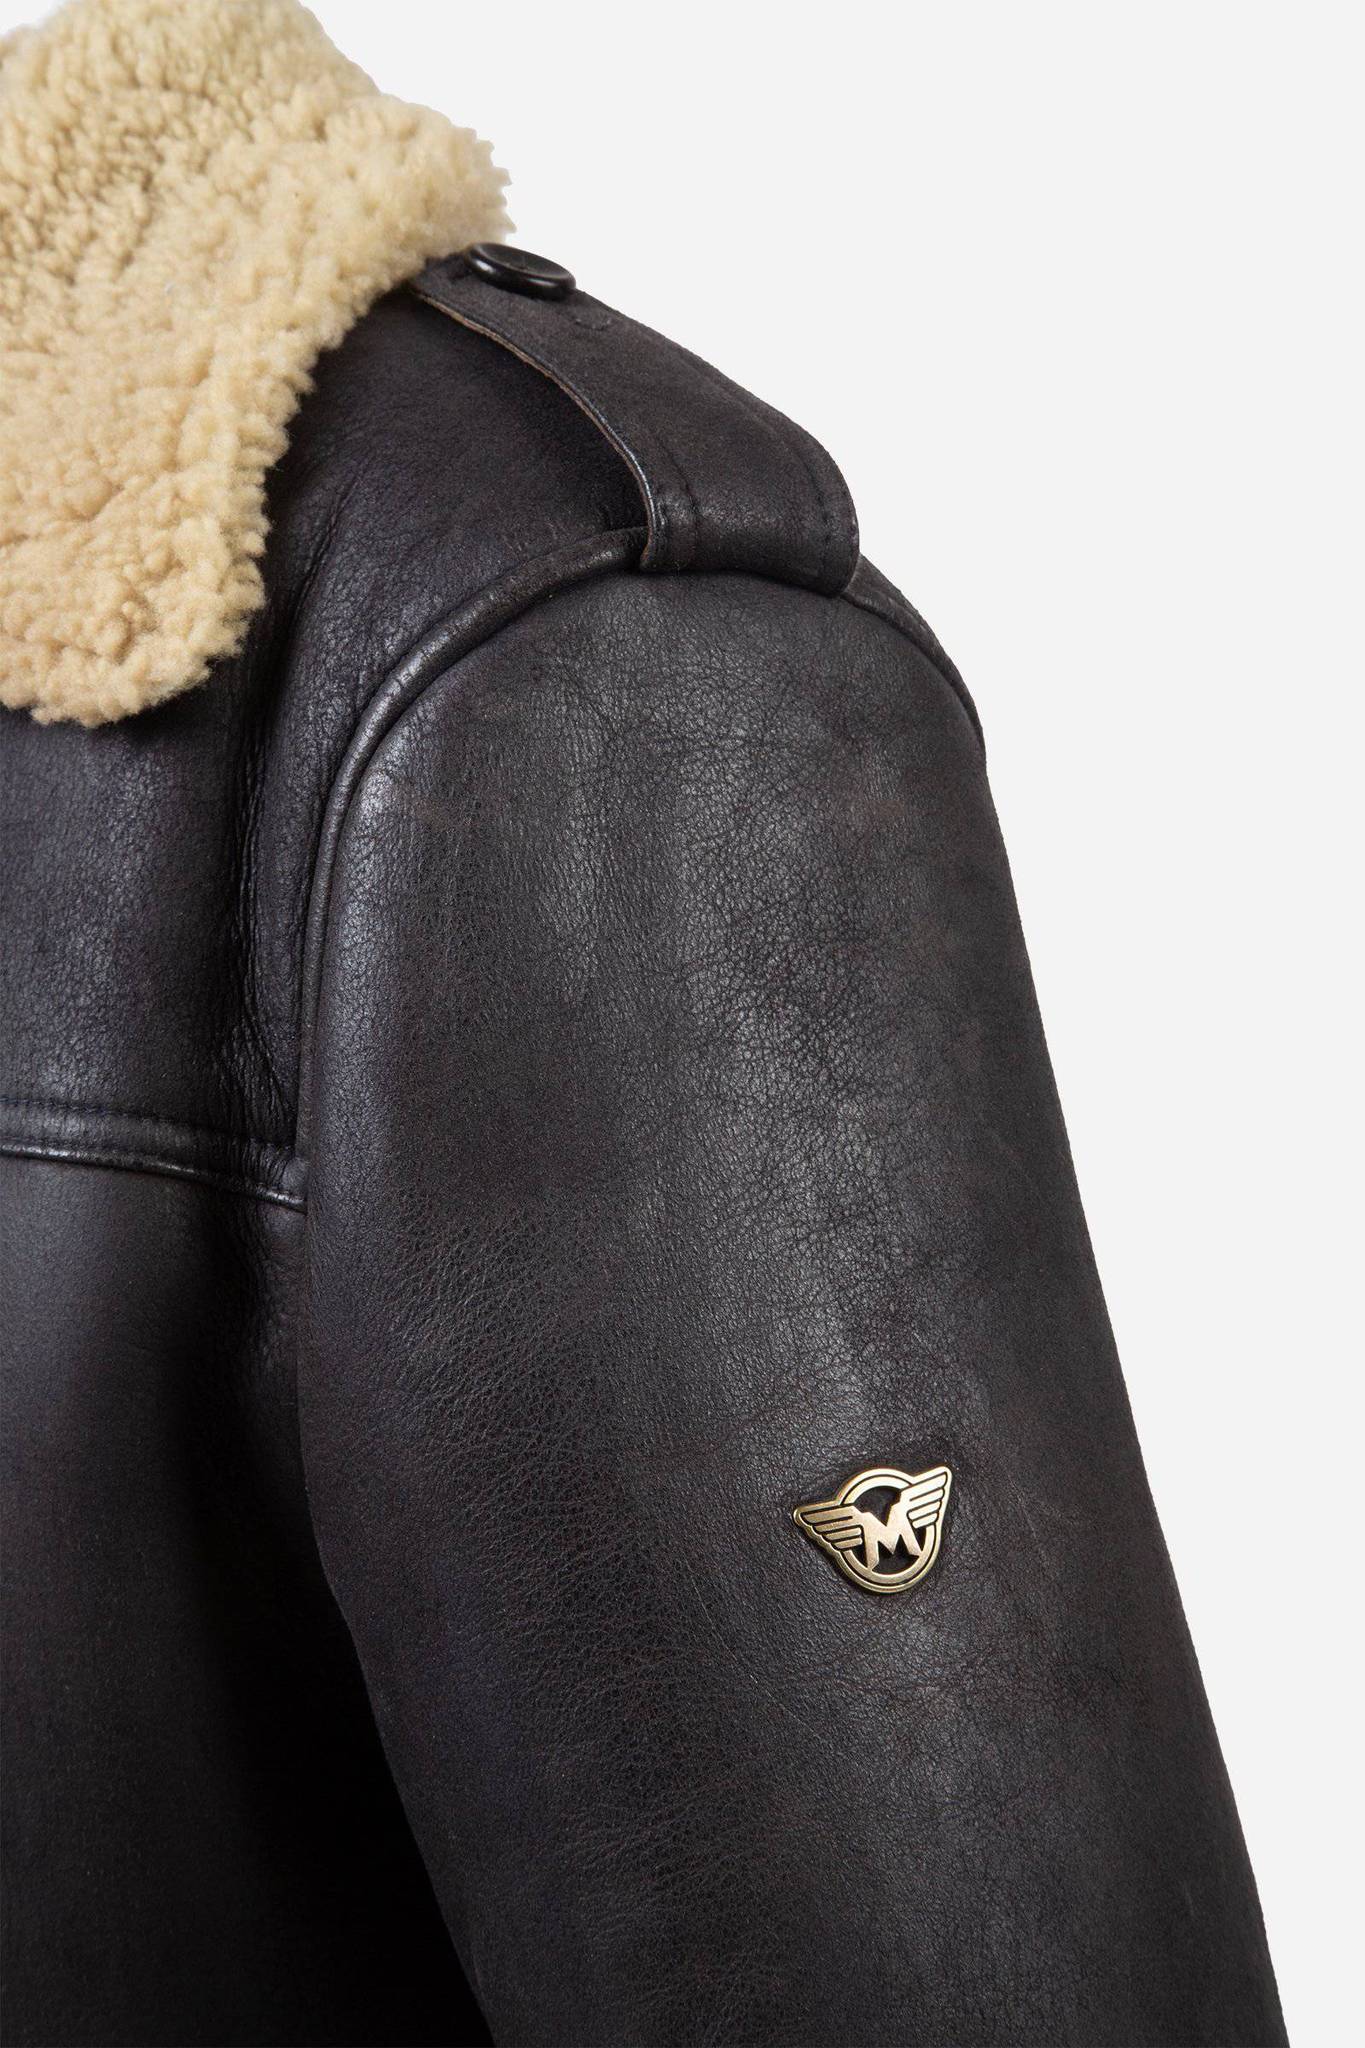 Matchless Fokker Men's Shearling Leather Trench Coat Black - Close Up Logo